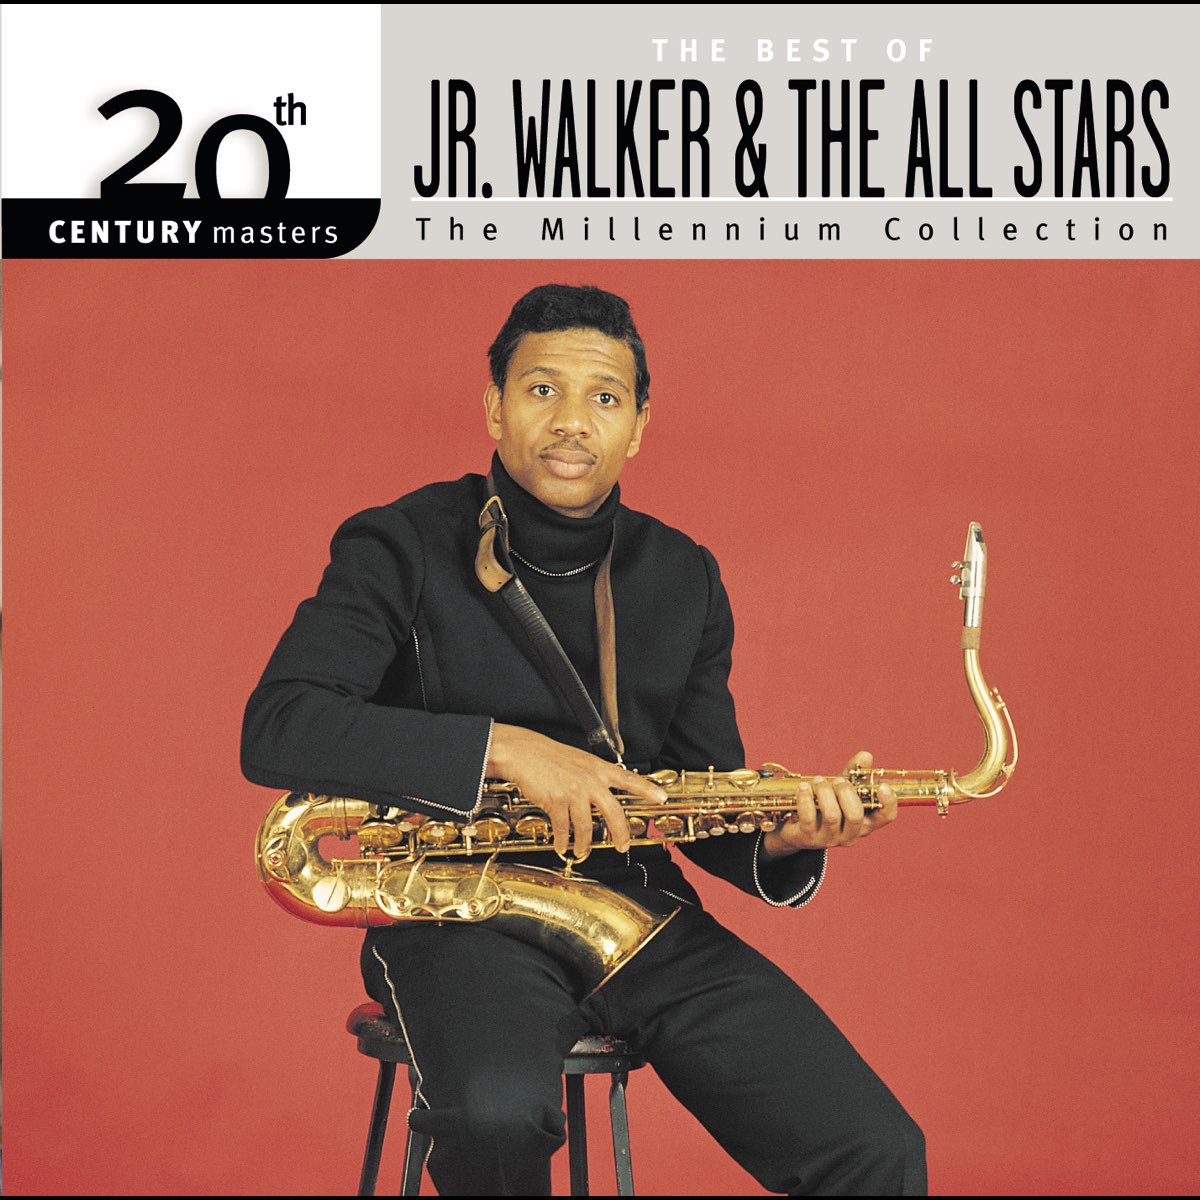 Werkgever Deuk Overwinnen 20th Century Masters - The Millennium Collection: Best of Jr. Walker & the  All Stars - Album by Junior Walker & The All Stars - Apple Music